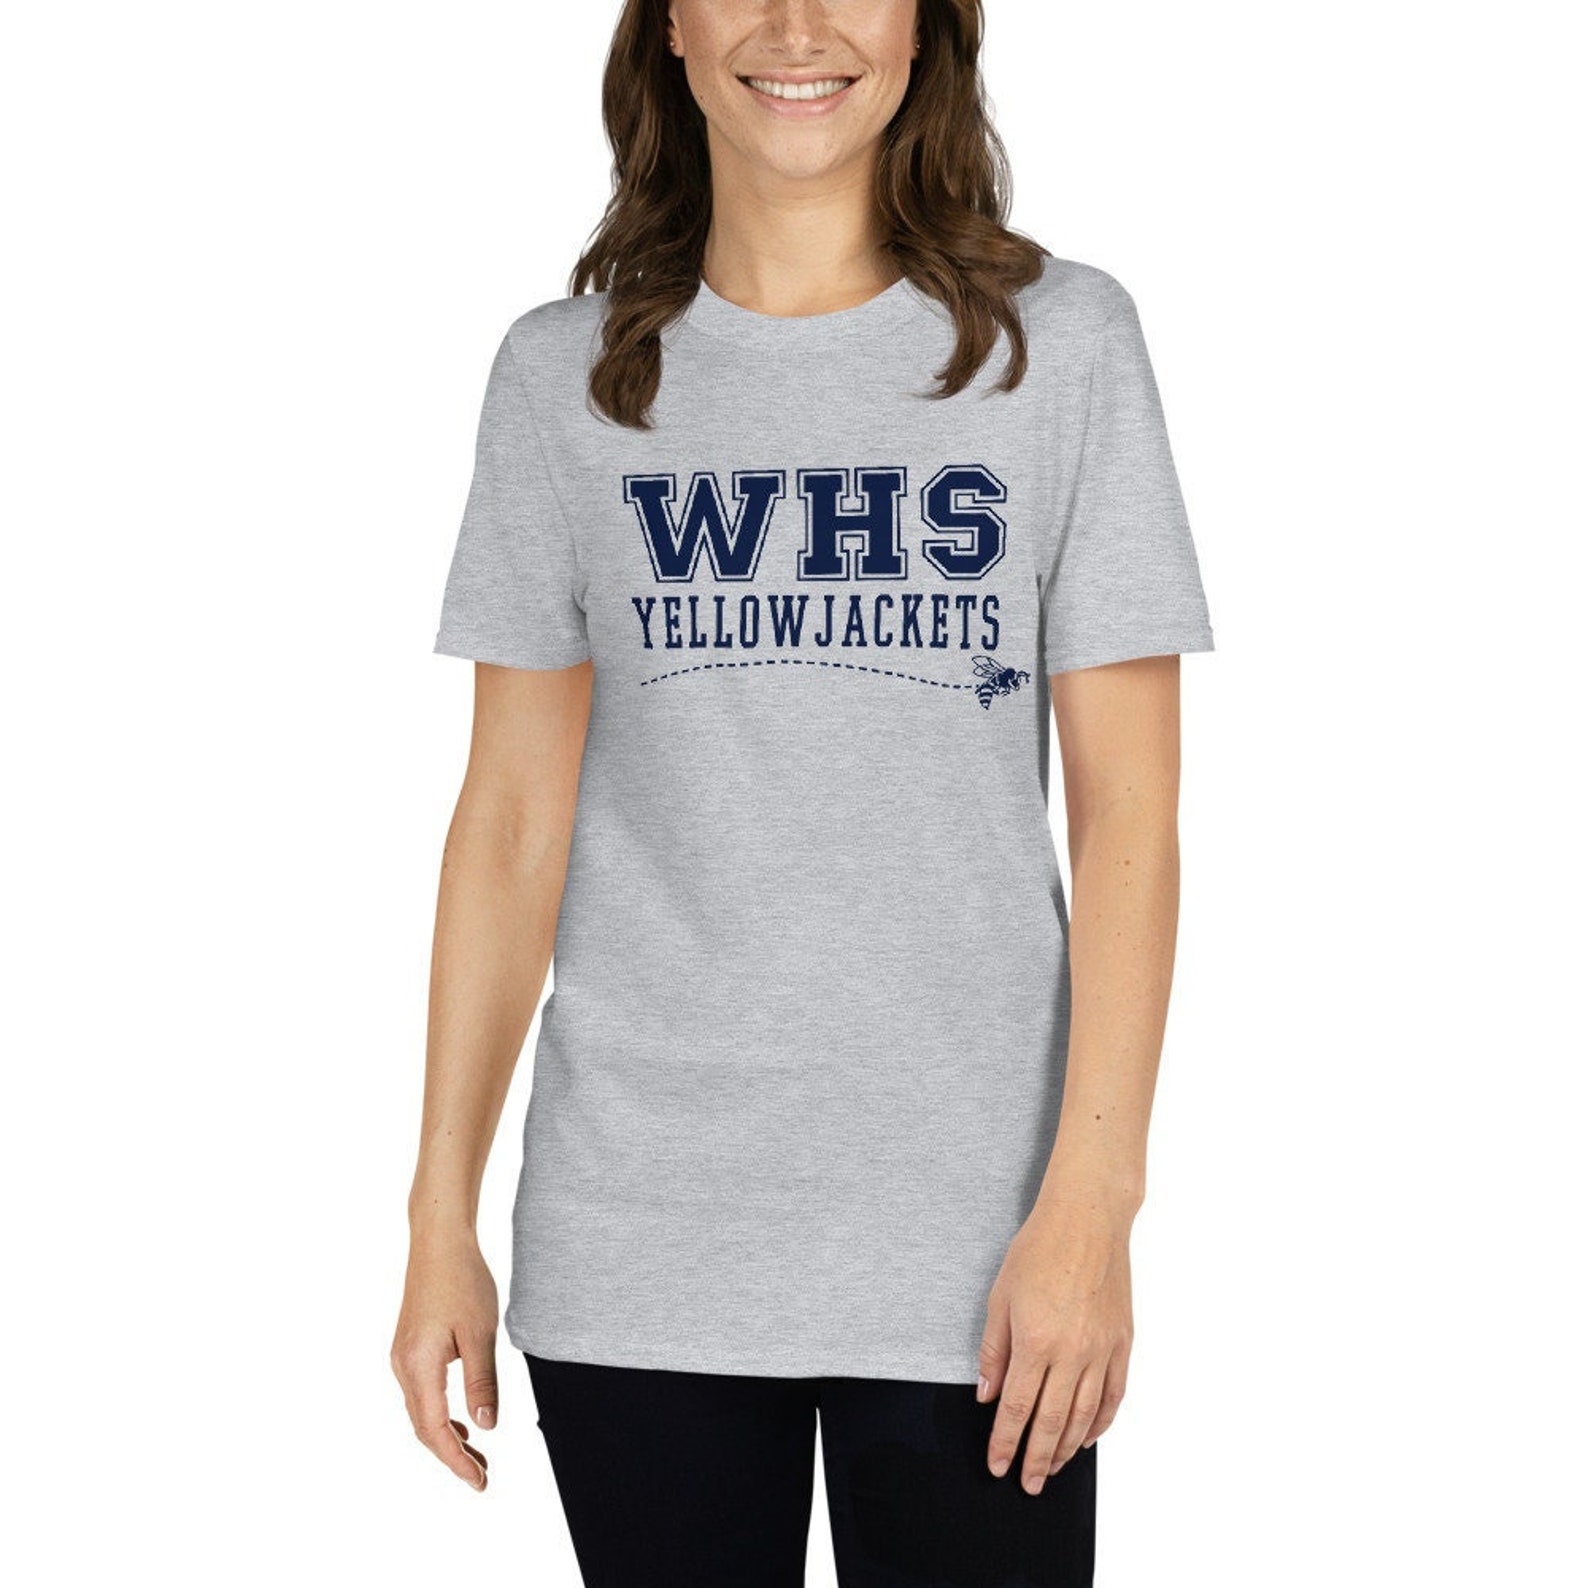 Yellowjackets WHS Soccer Team Jersey Uniform Shirt Wiskayok | Etsy